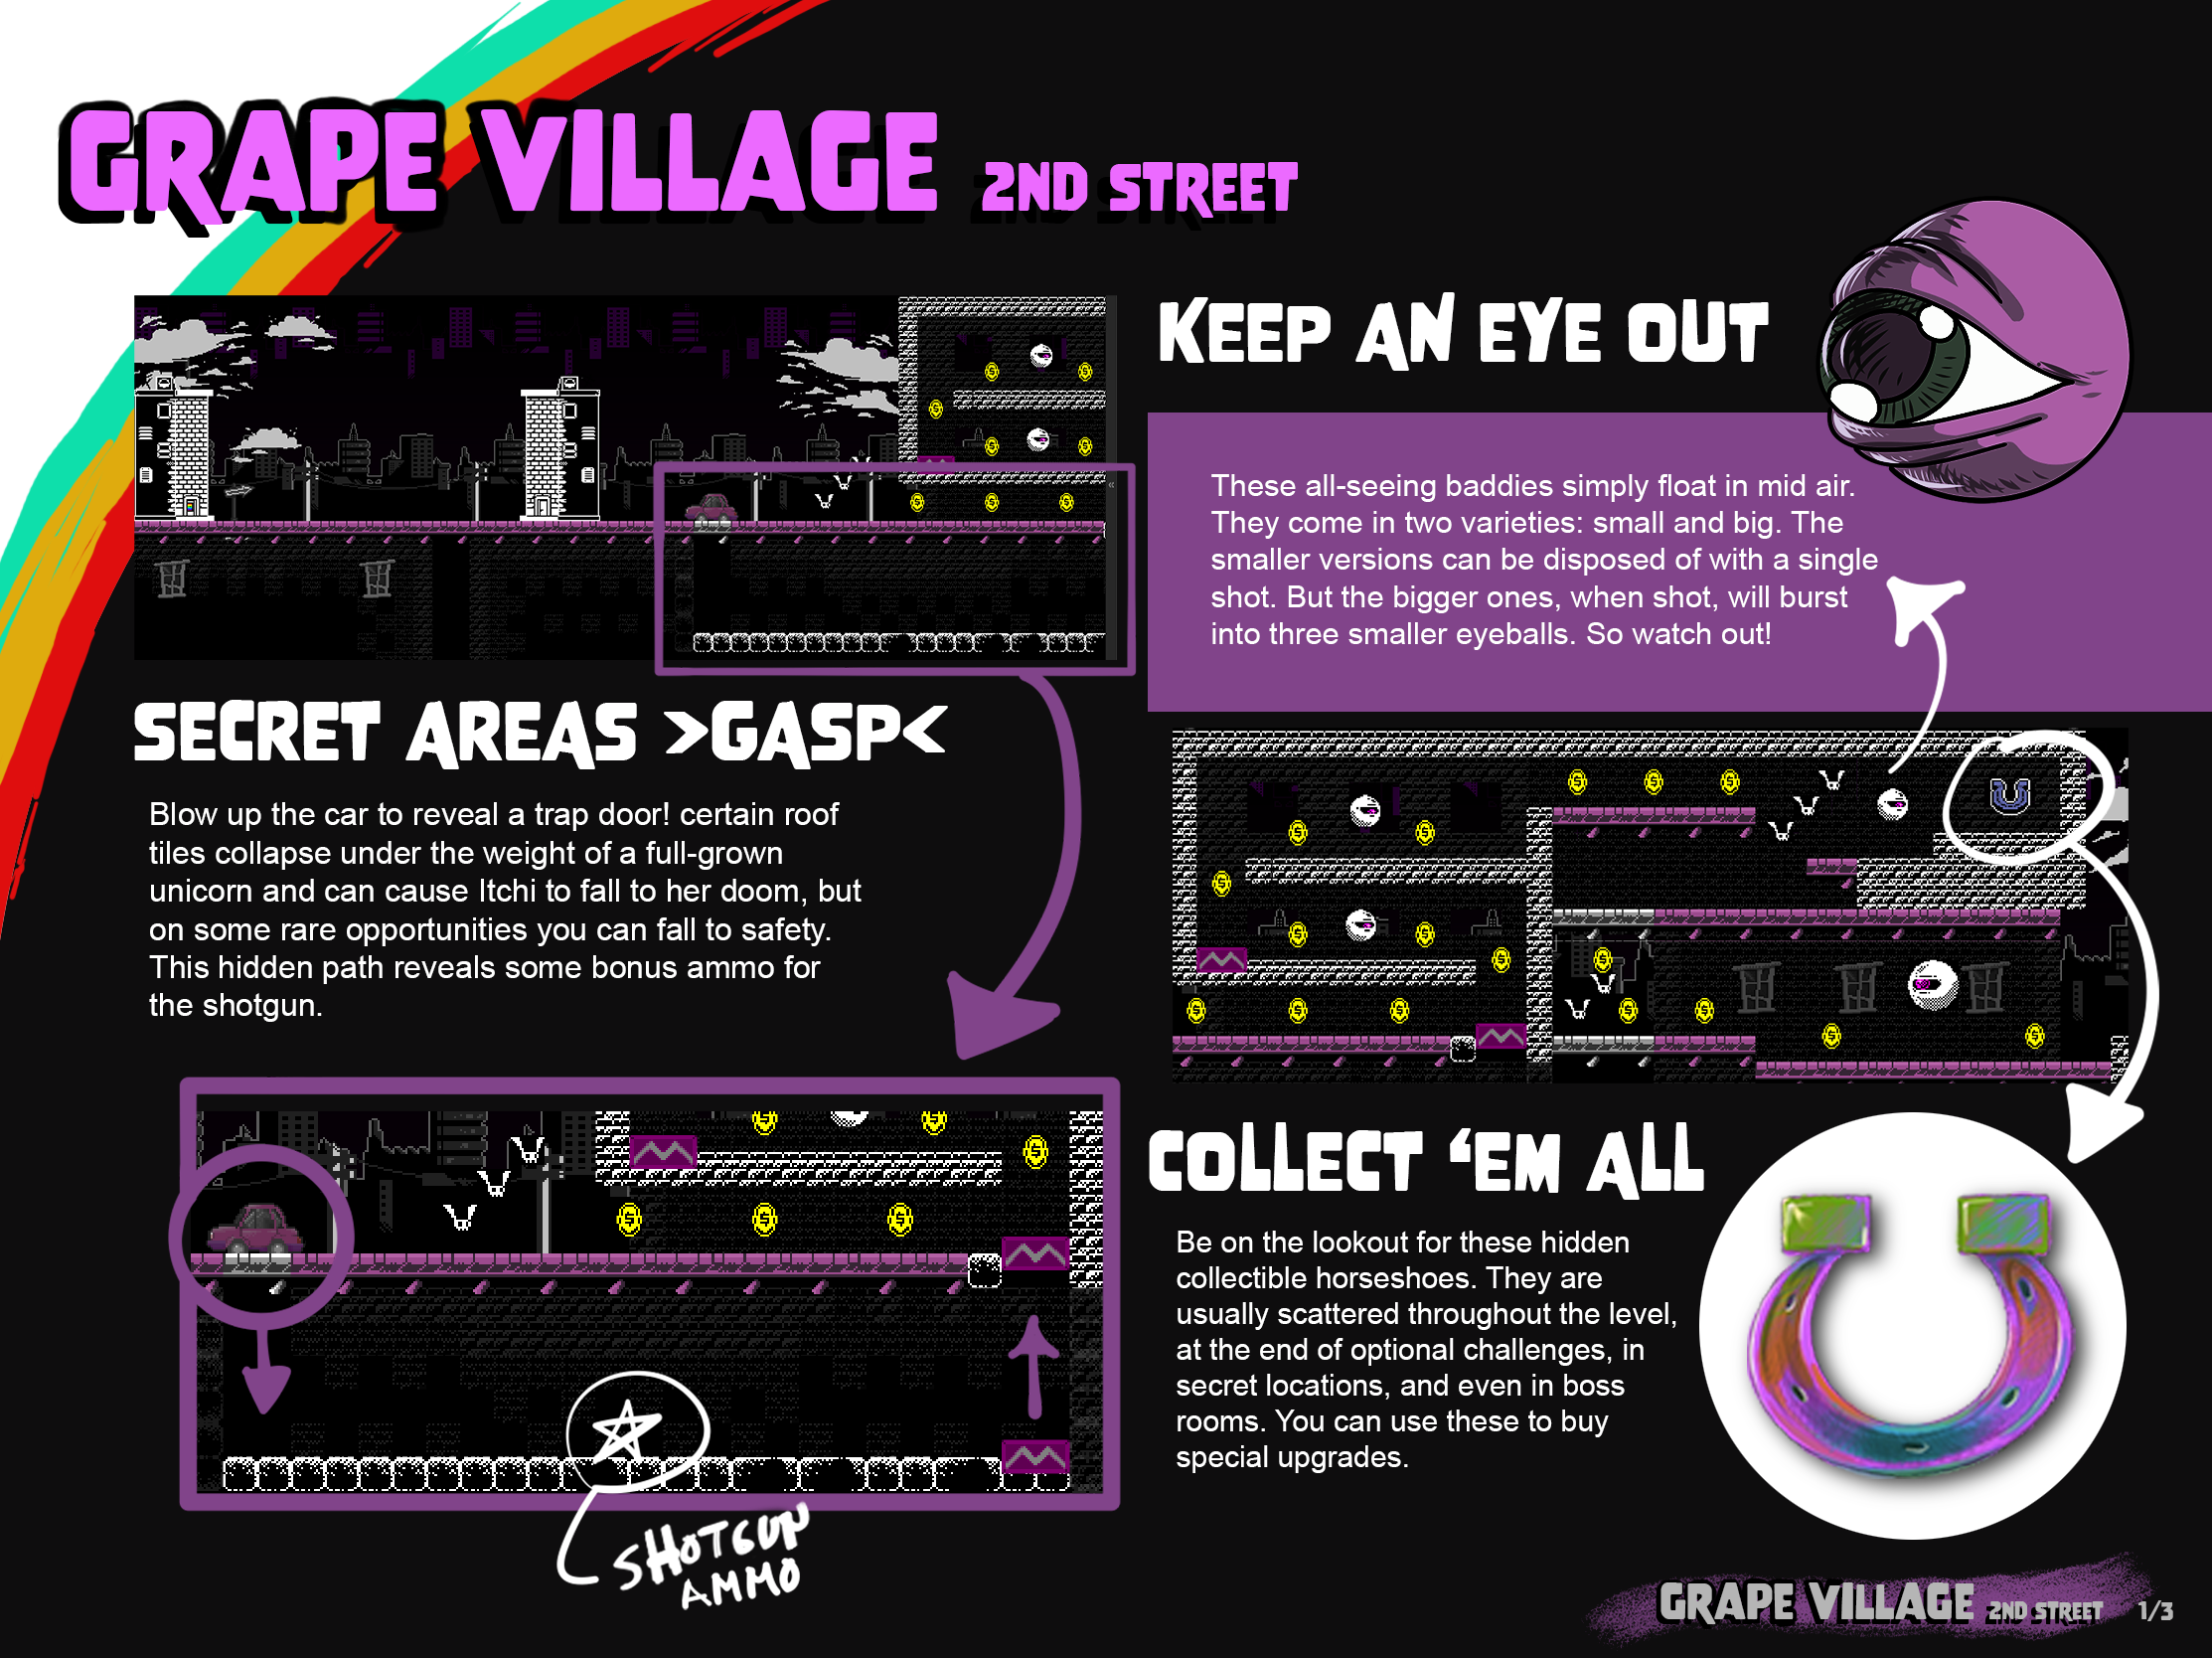 Grape Village - 2nd St